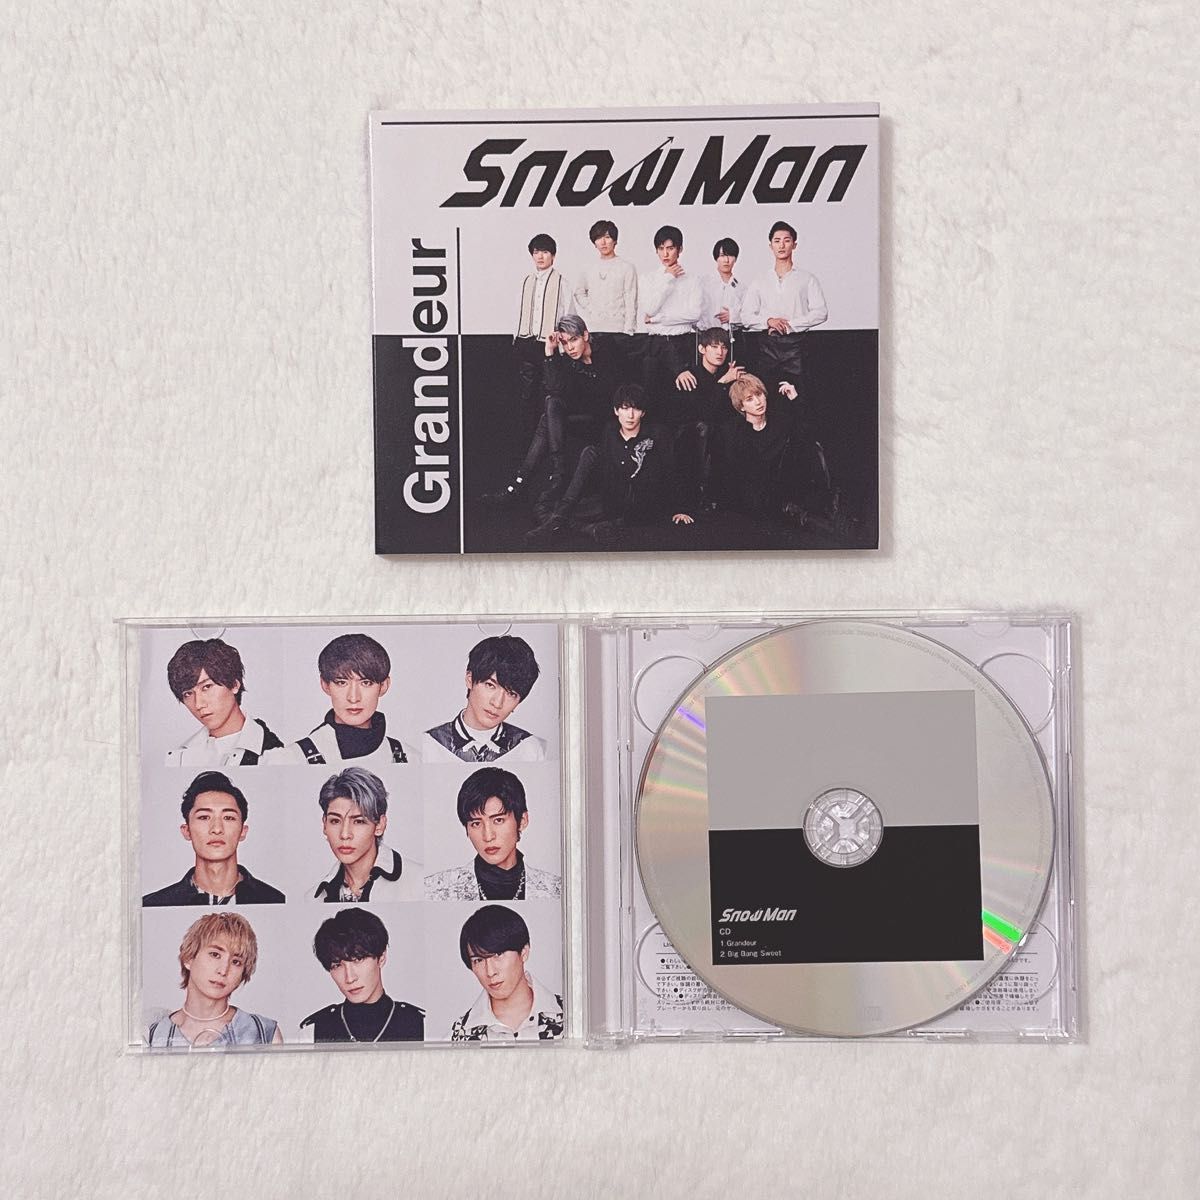 SnowMan グランドール Grandeur スノーマン CD シングル 初回盤A 初回盤B 初回限定盤 初回 CD+DVD